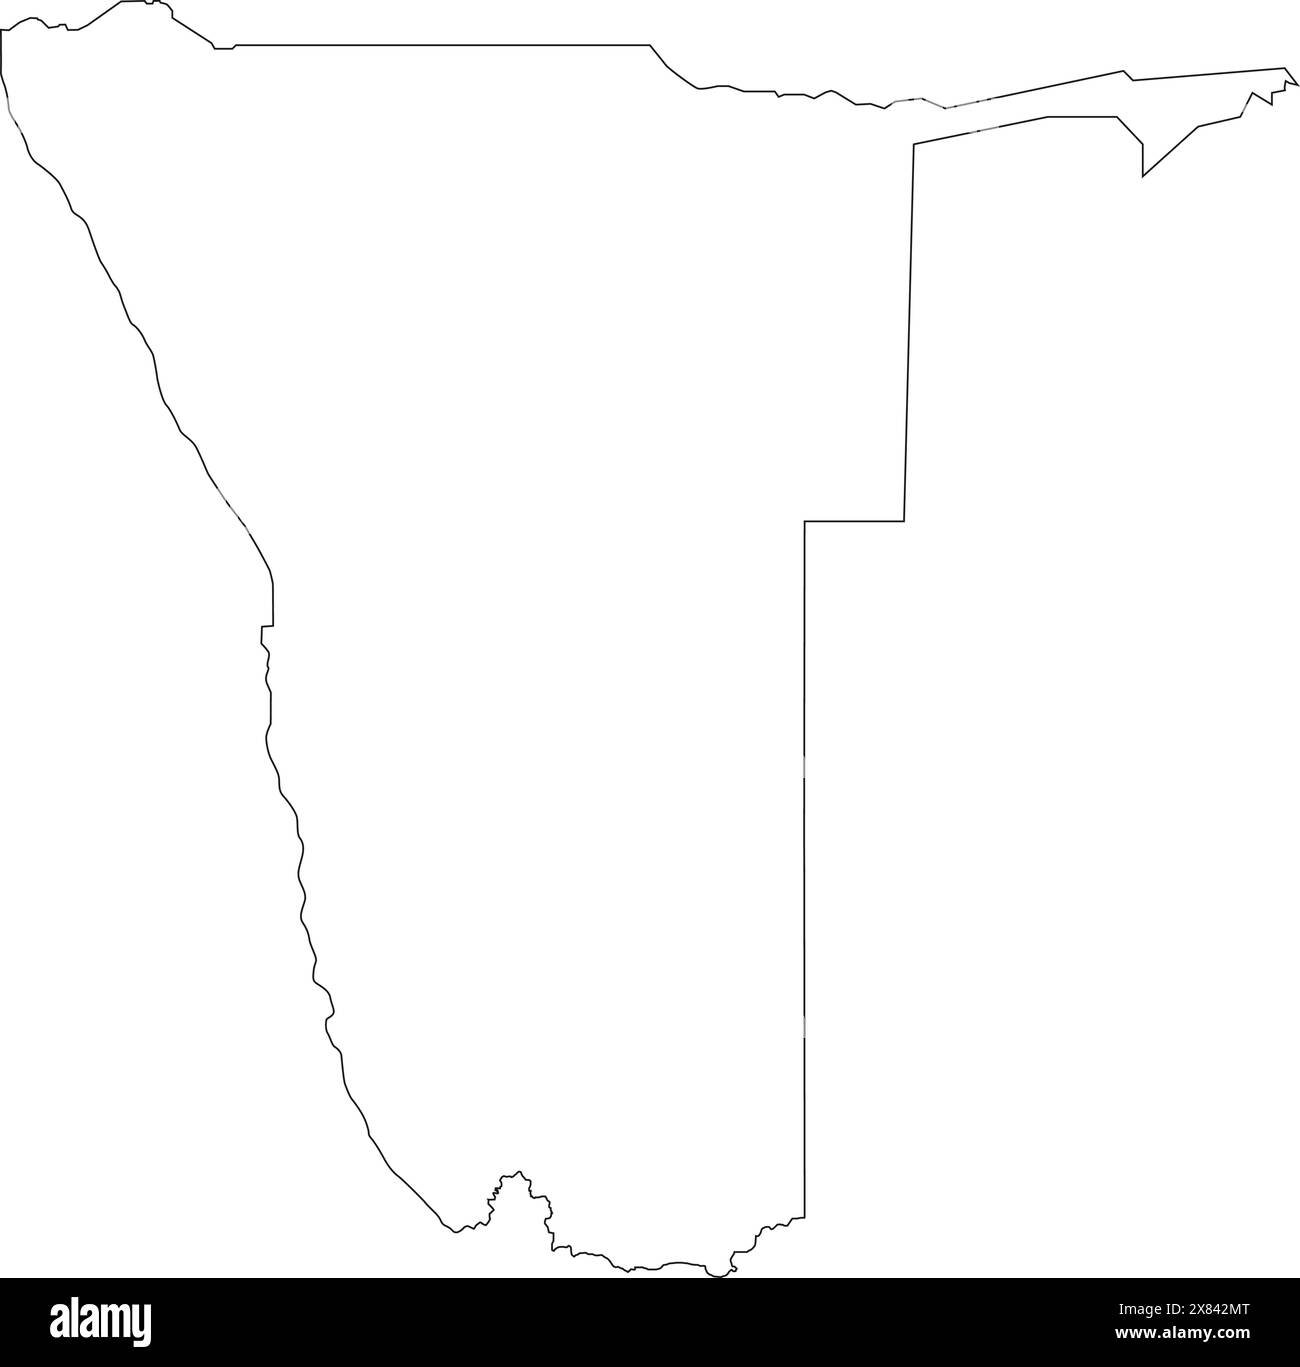 namibia Landkarte Symbol afrika Kontinent Illustrationsdesign Stock Vektor